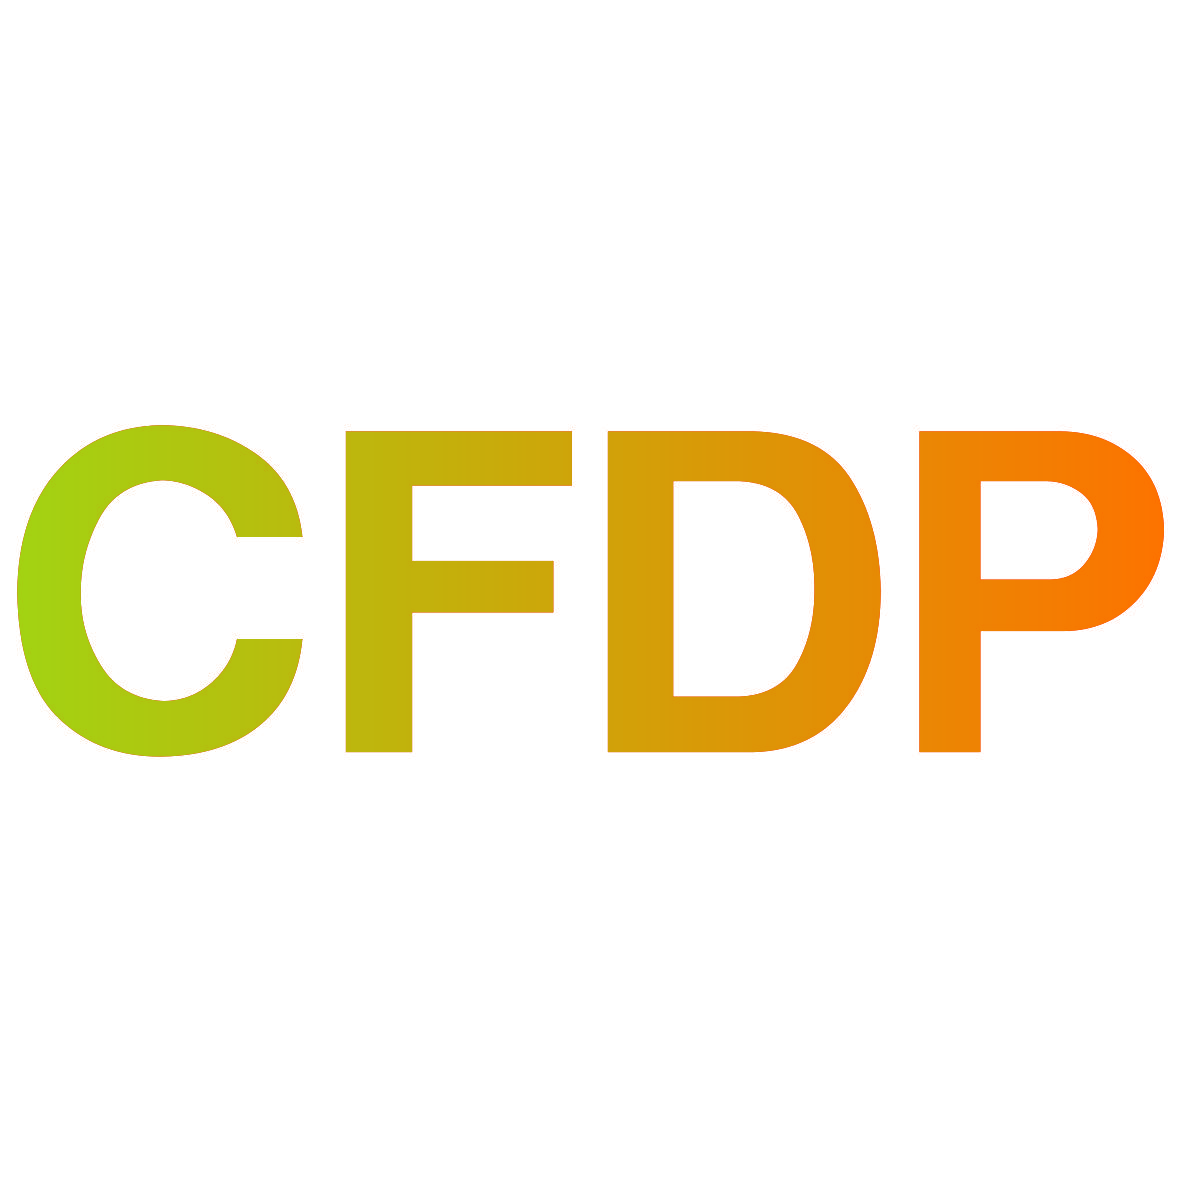 CFDP